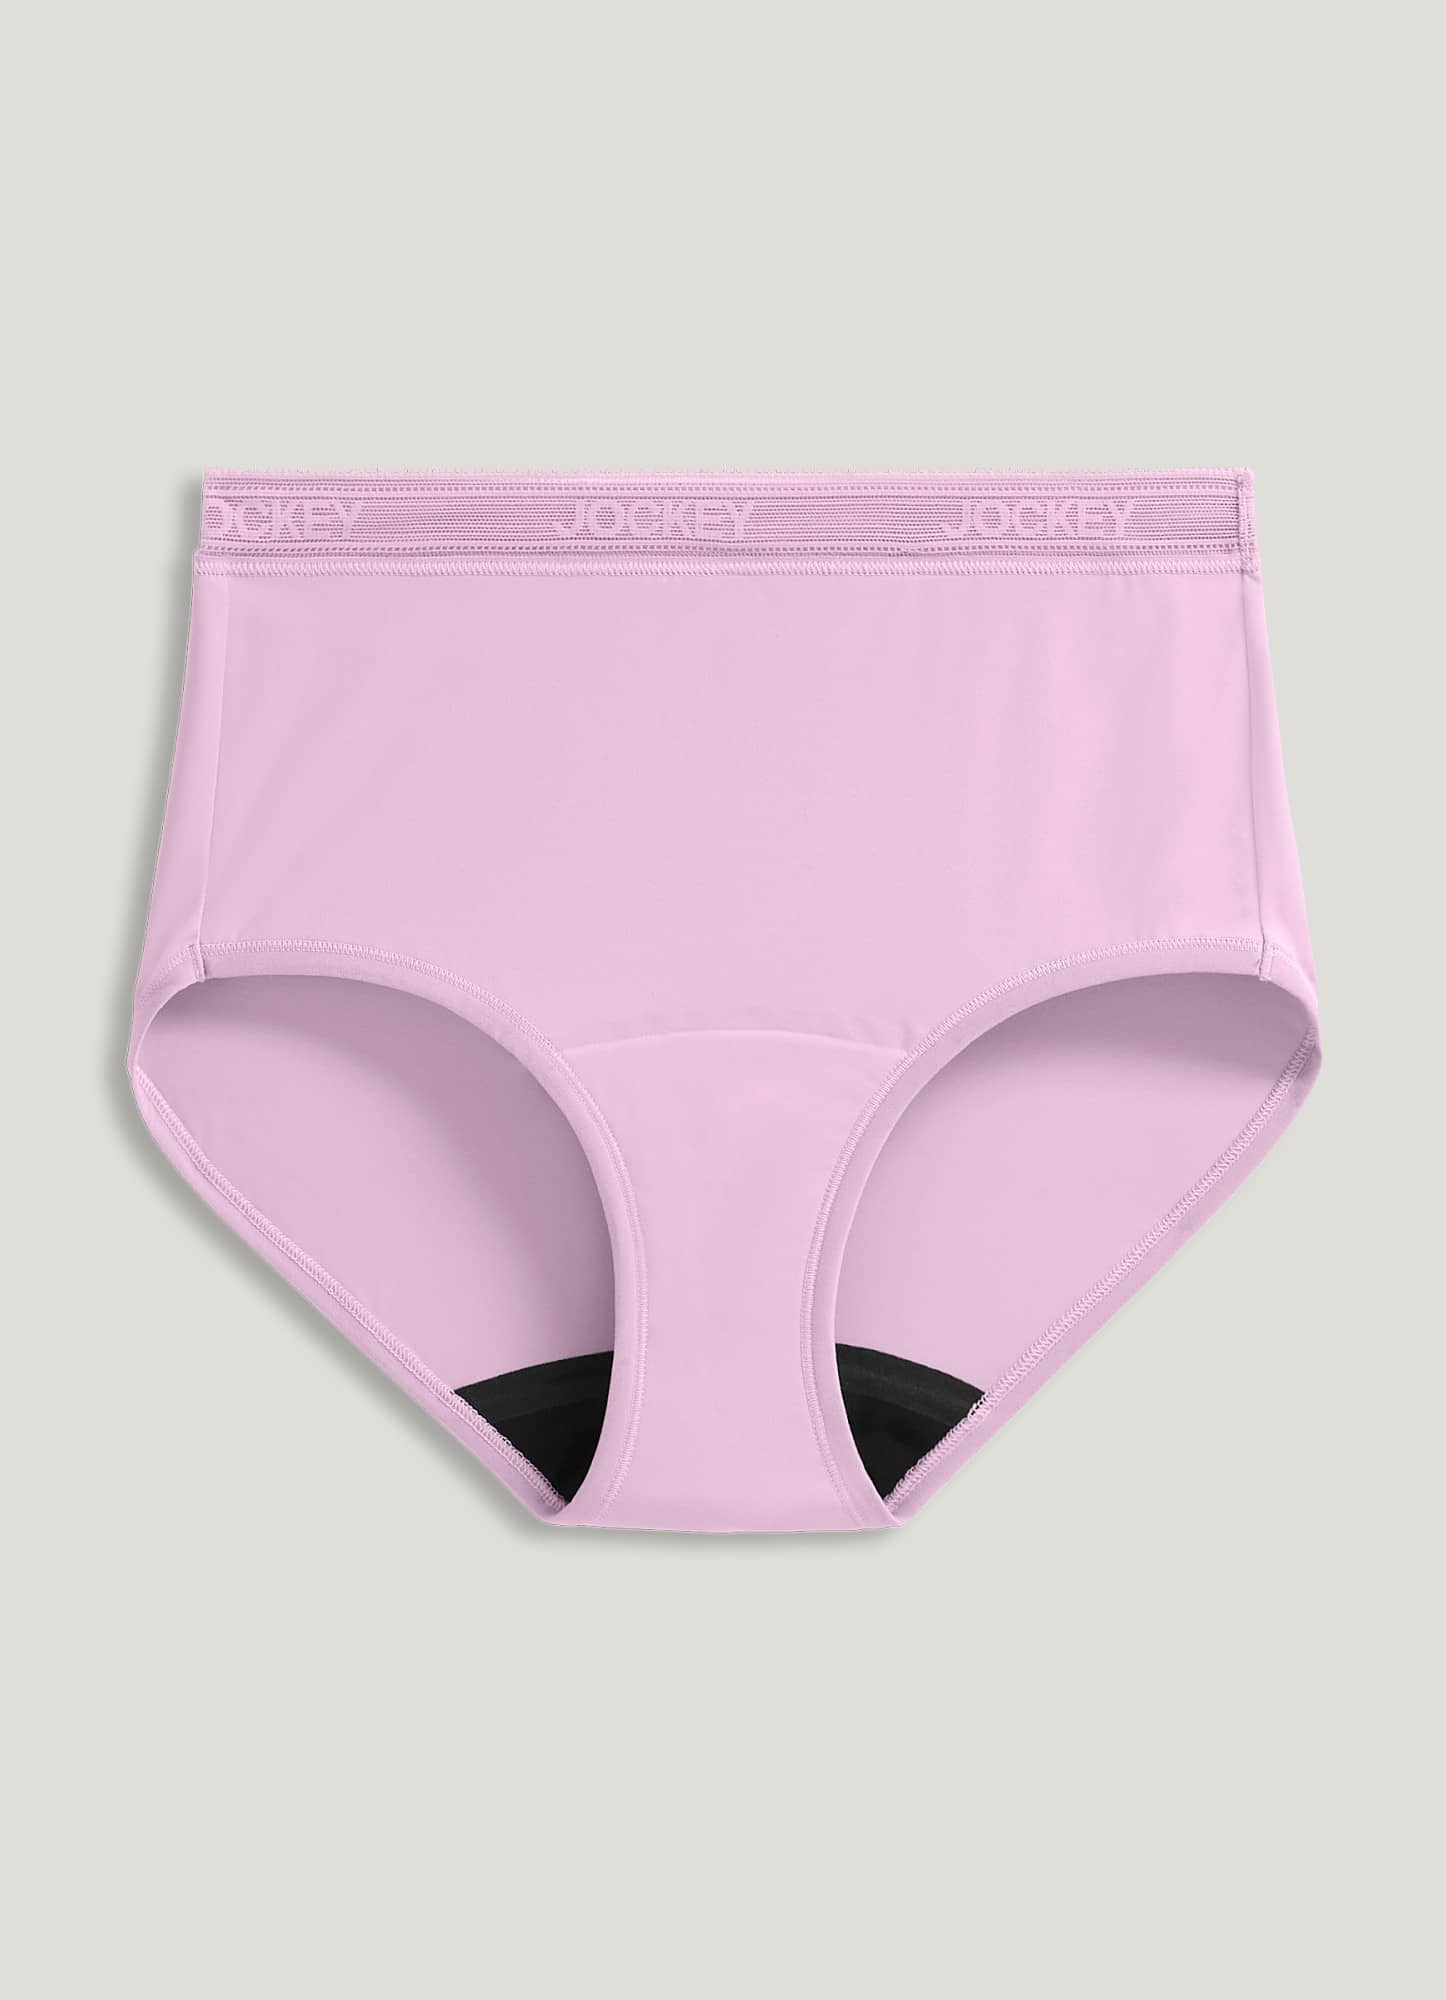 Jockey® 2pcs Ladies Panties Microfiber Spandex Seamless Comfort